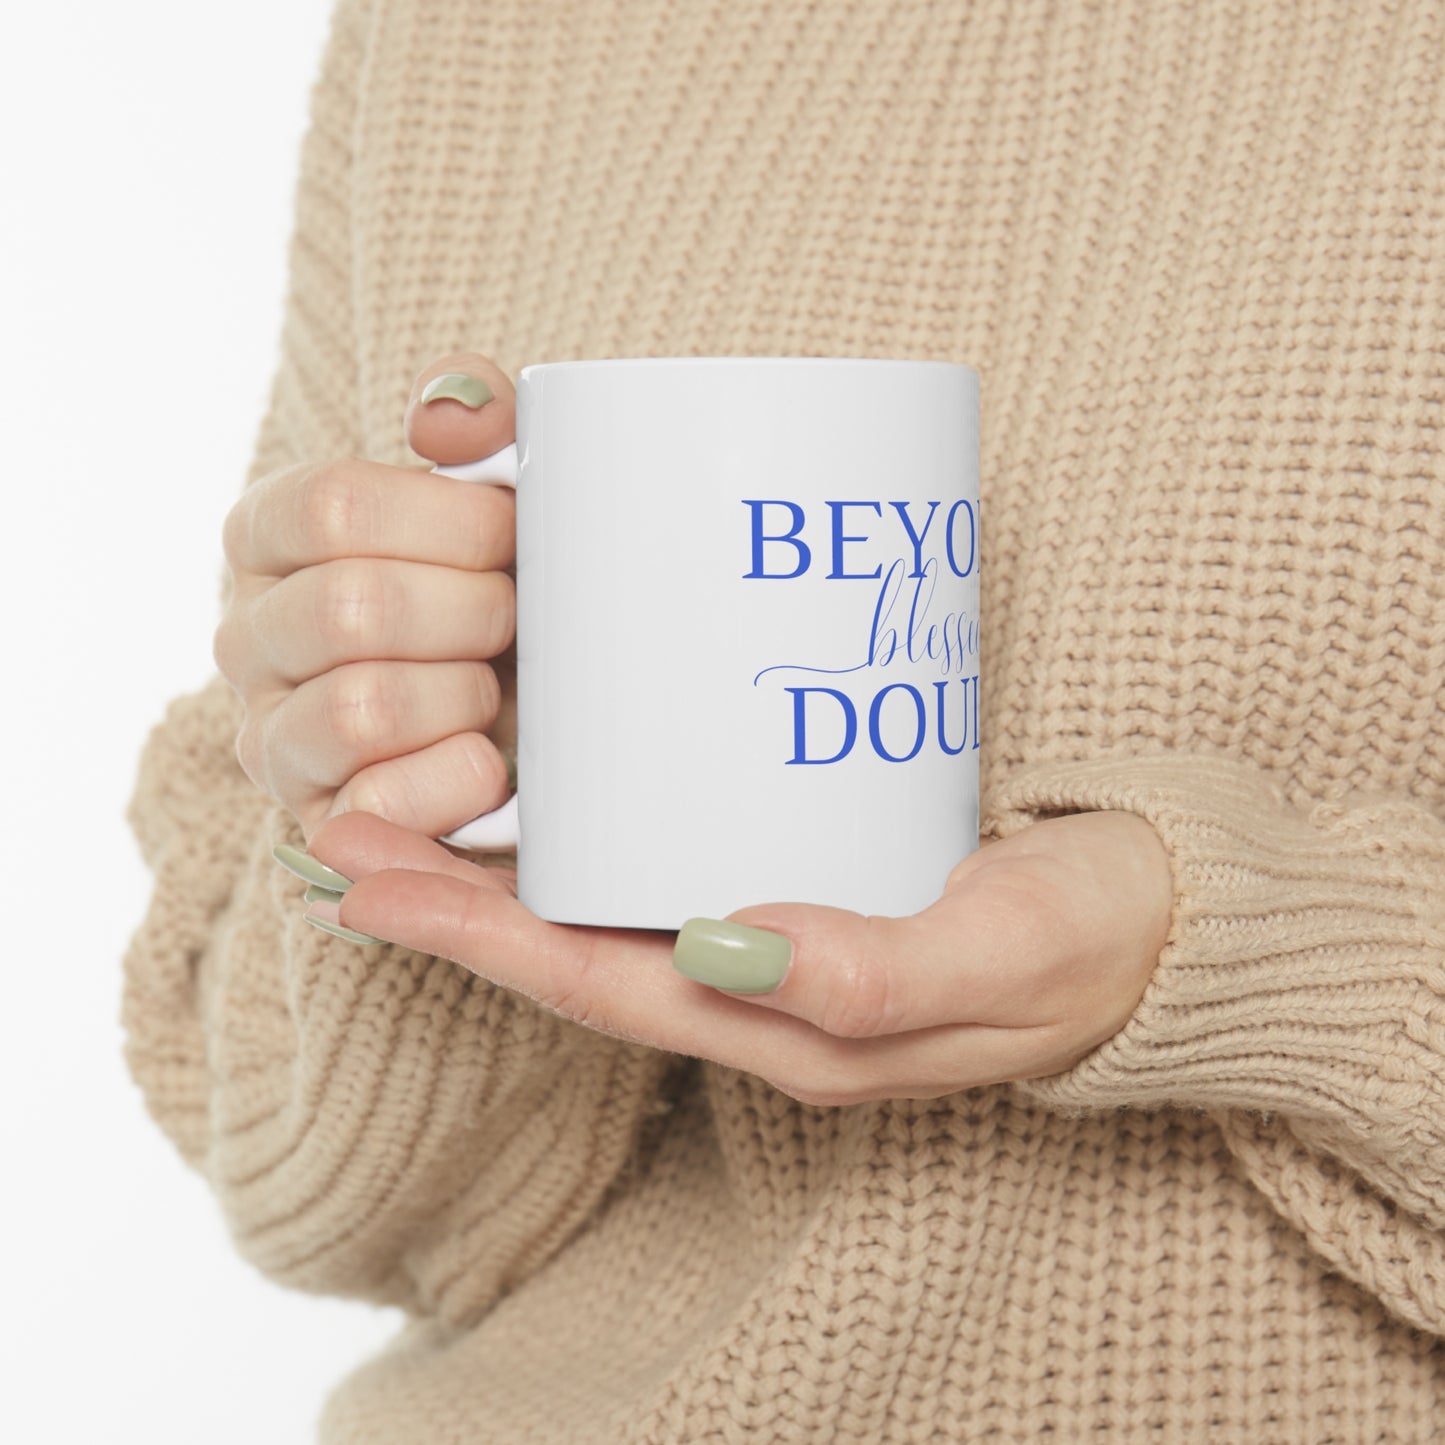 Beyond Blessed Doula - Plain Ceramic Mug 11oz - Royal Blue